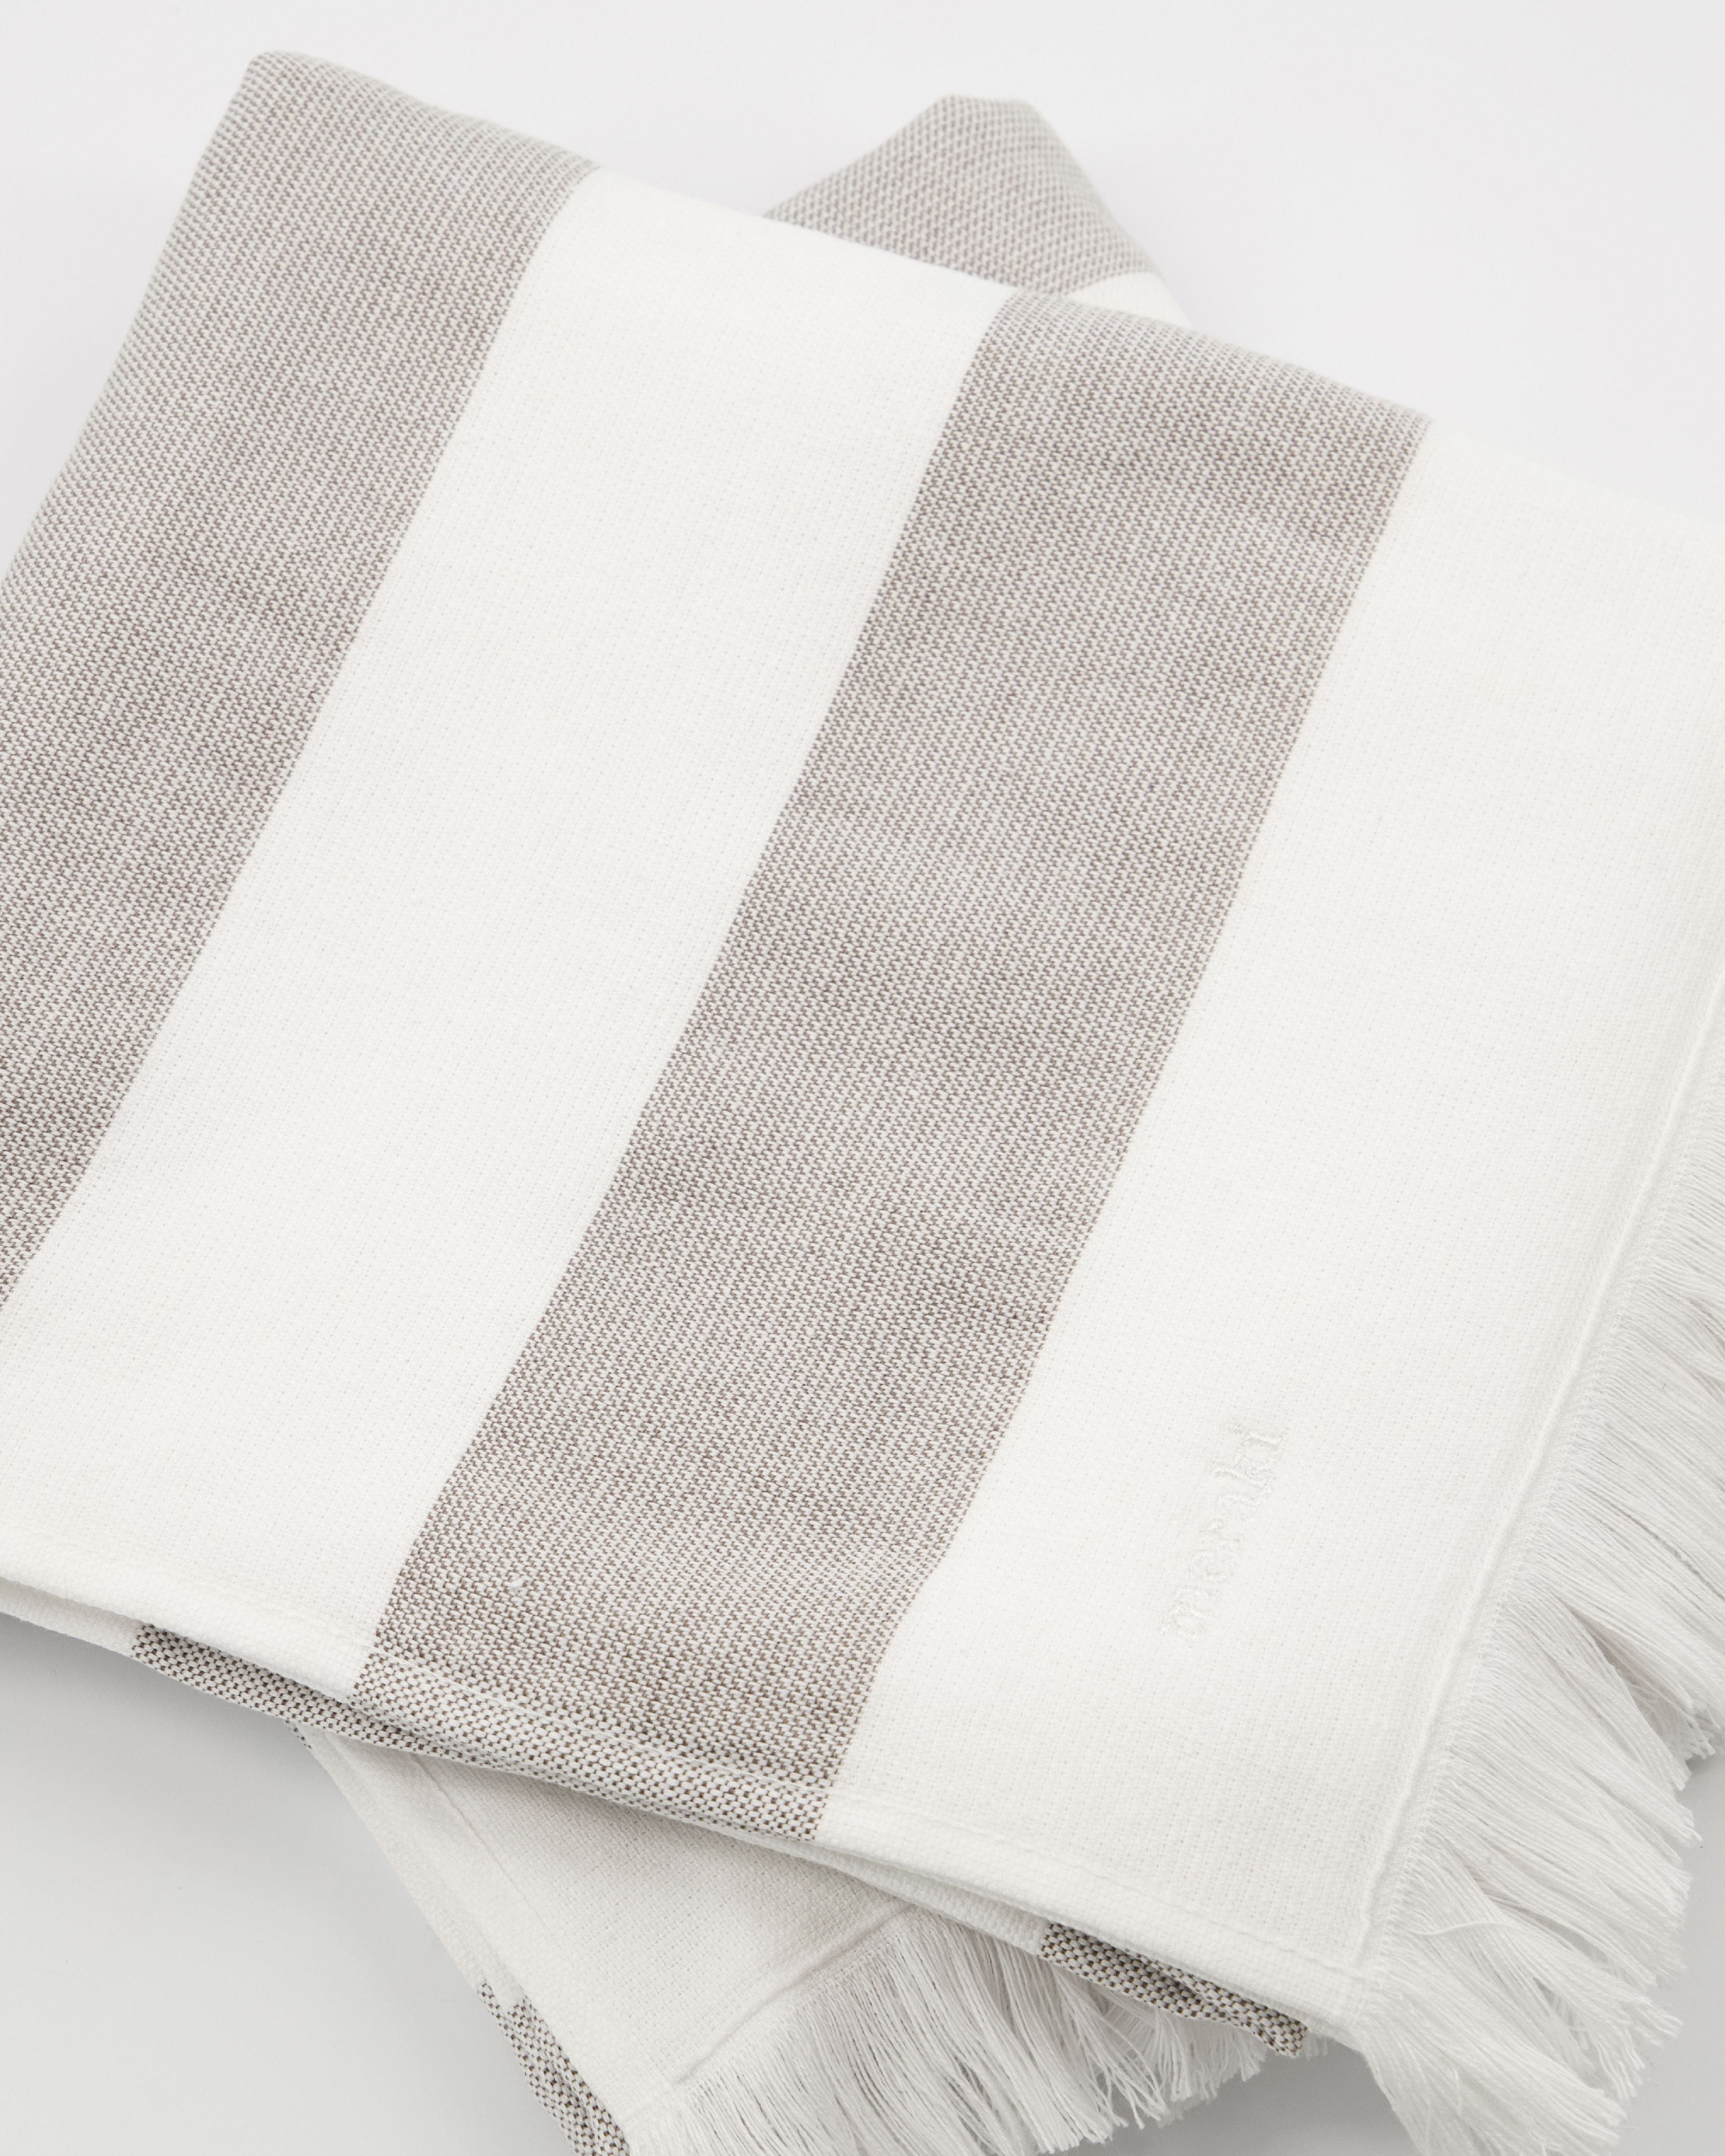 Meraki Barbarum -håndklædesæt på 20x100 cm, hvide og brune striber